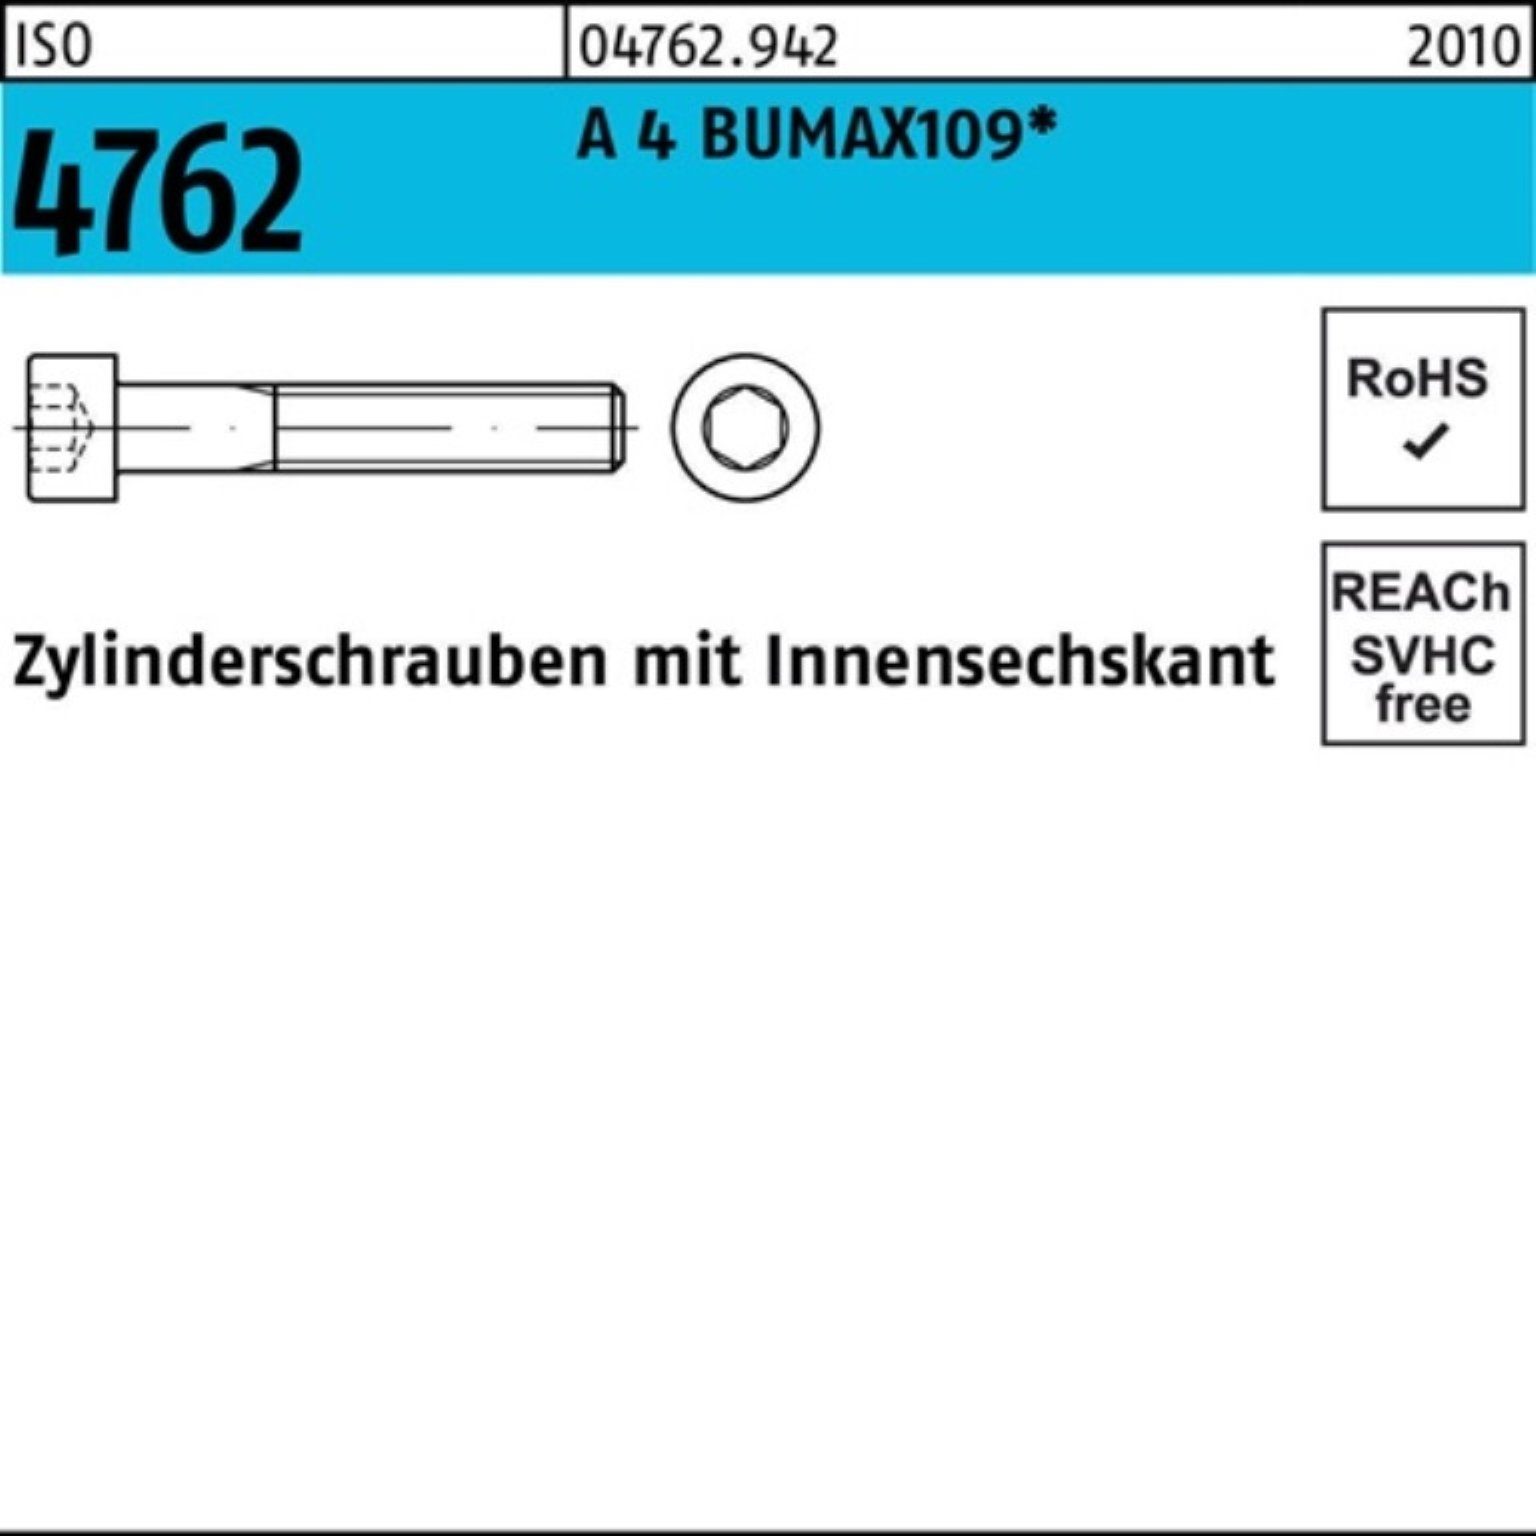 Bufab Zylinderschraube 100er Pack Zylinderschraube ISO 4762 Innen-6kt M10x 40 A 4 BUMAX109 50